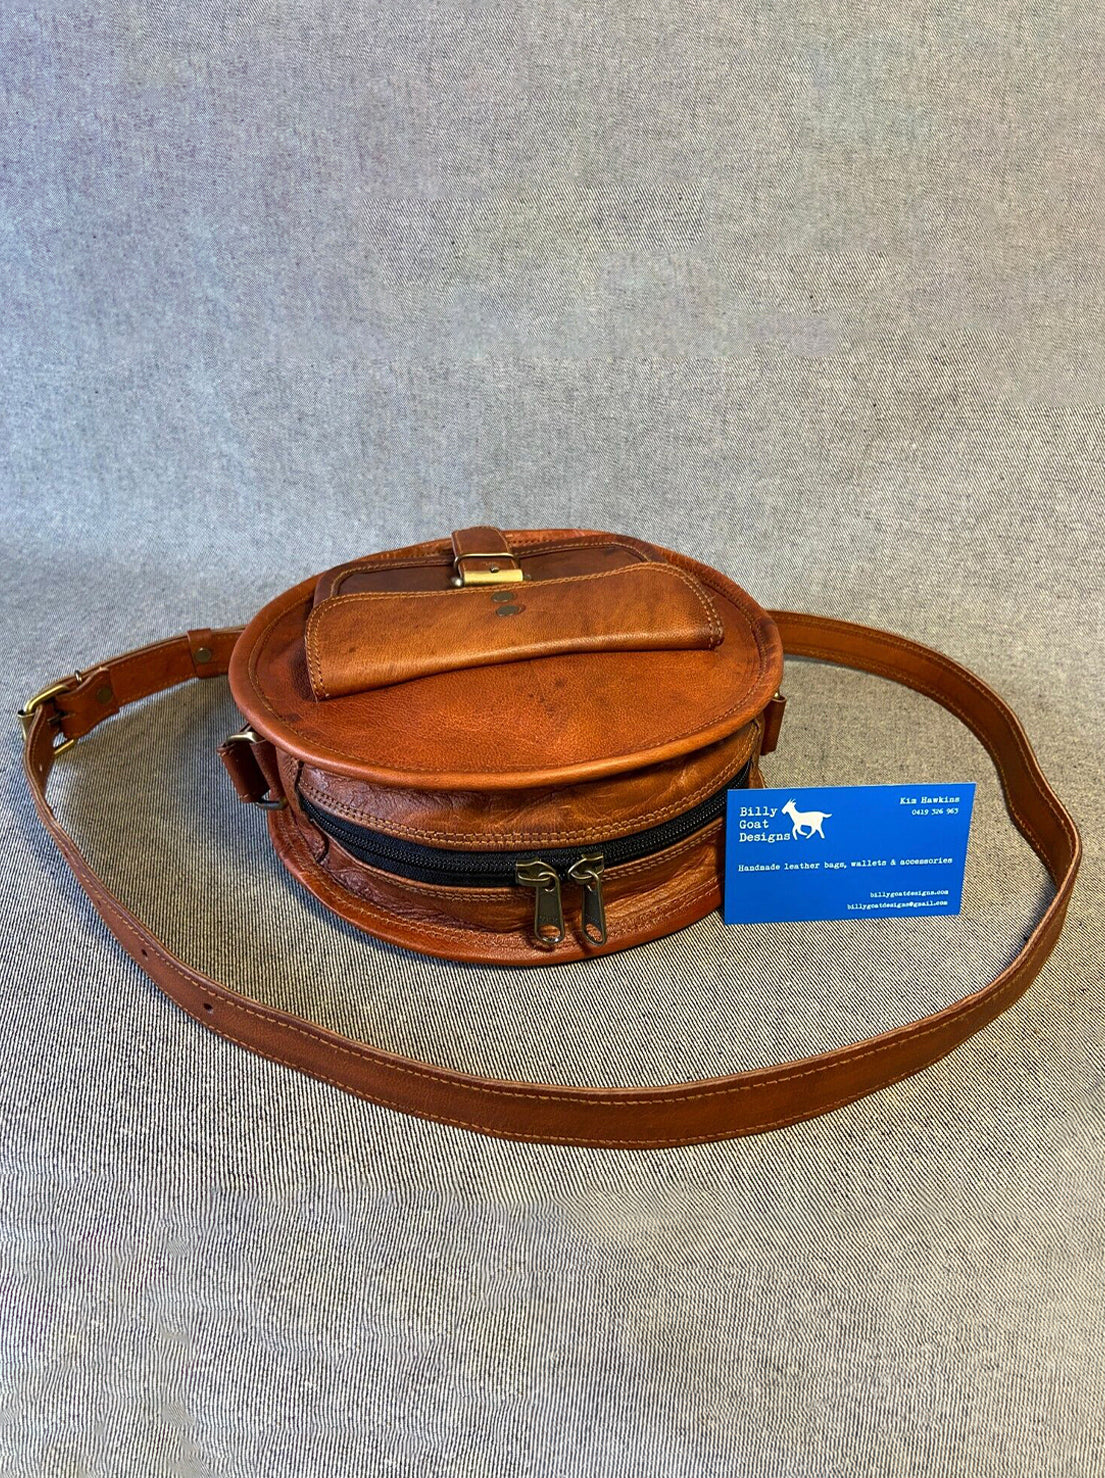 Billy Goat Designs - Leather Circle Shoulder Bag w/ Zip - Medium 11" (R11PZ)